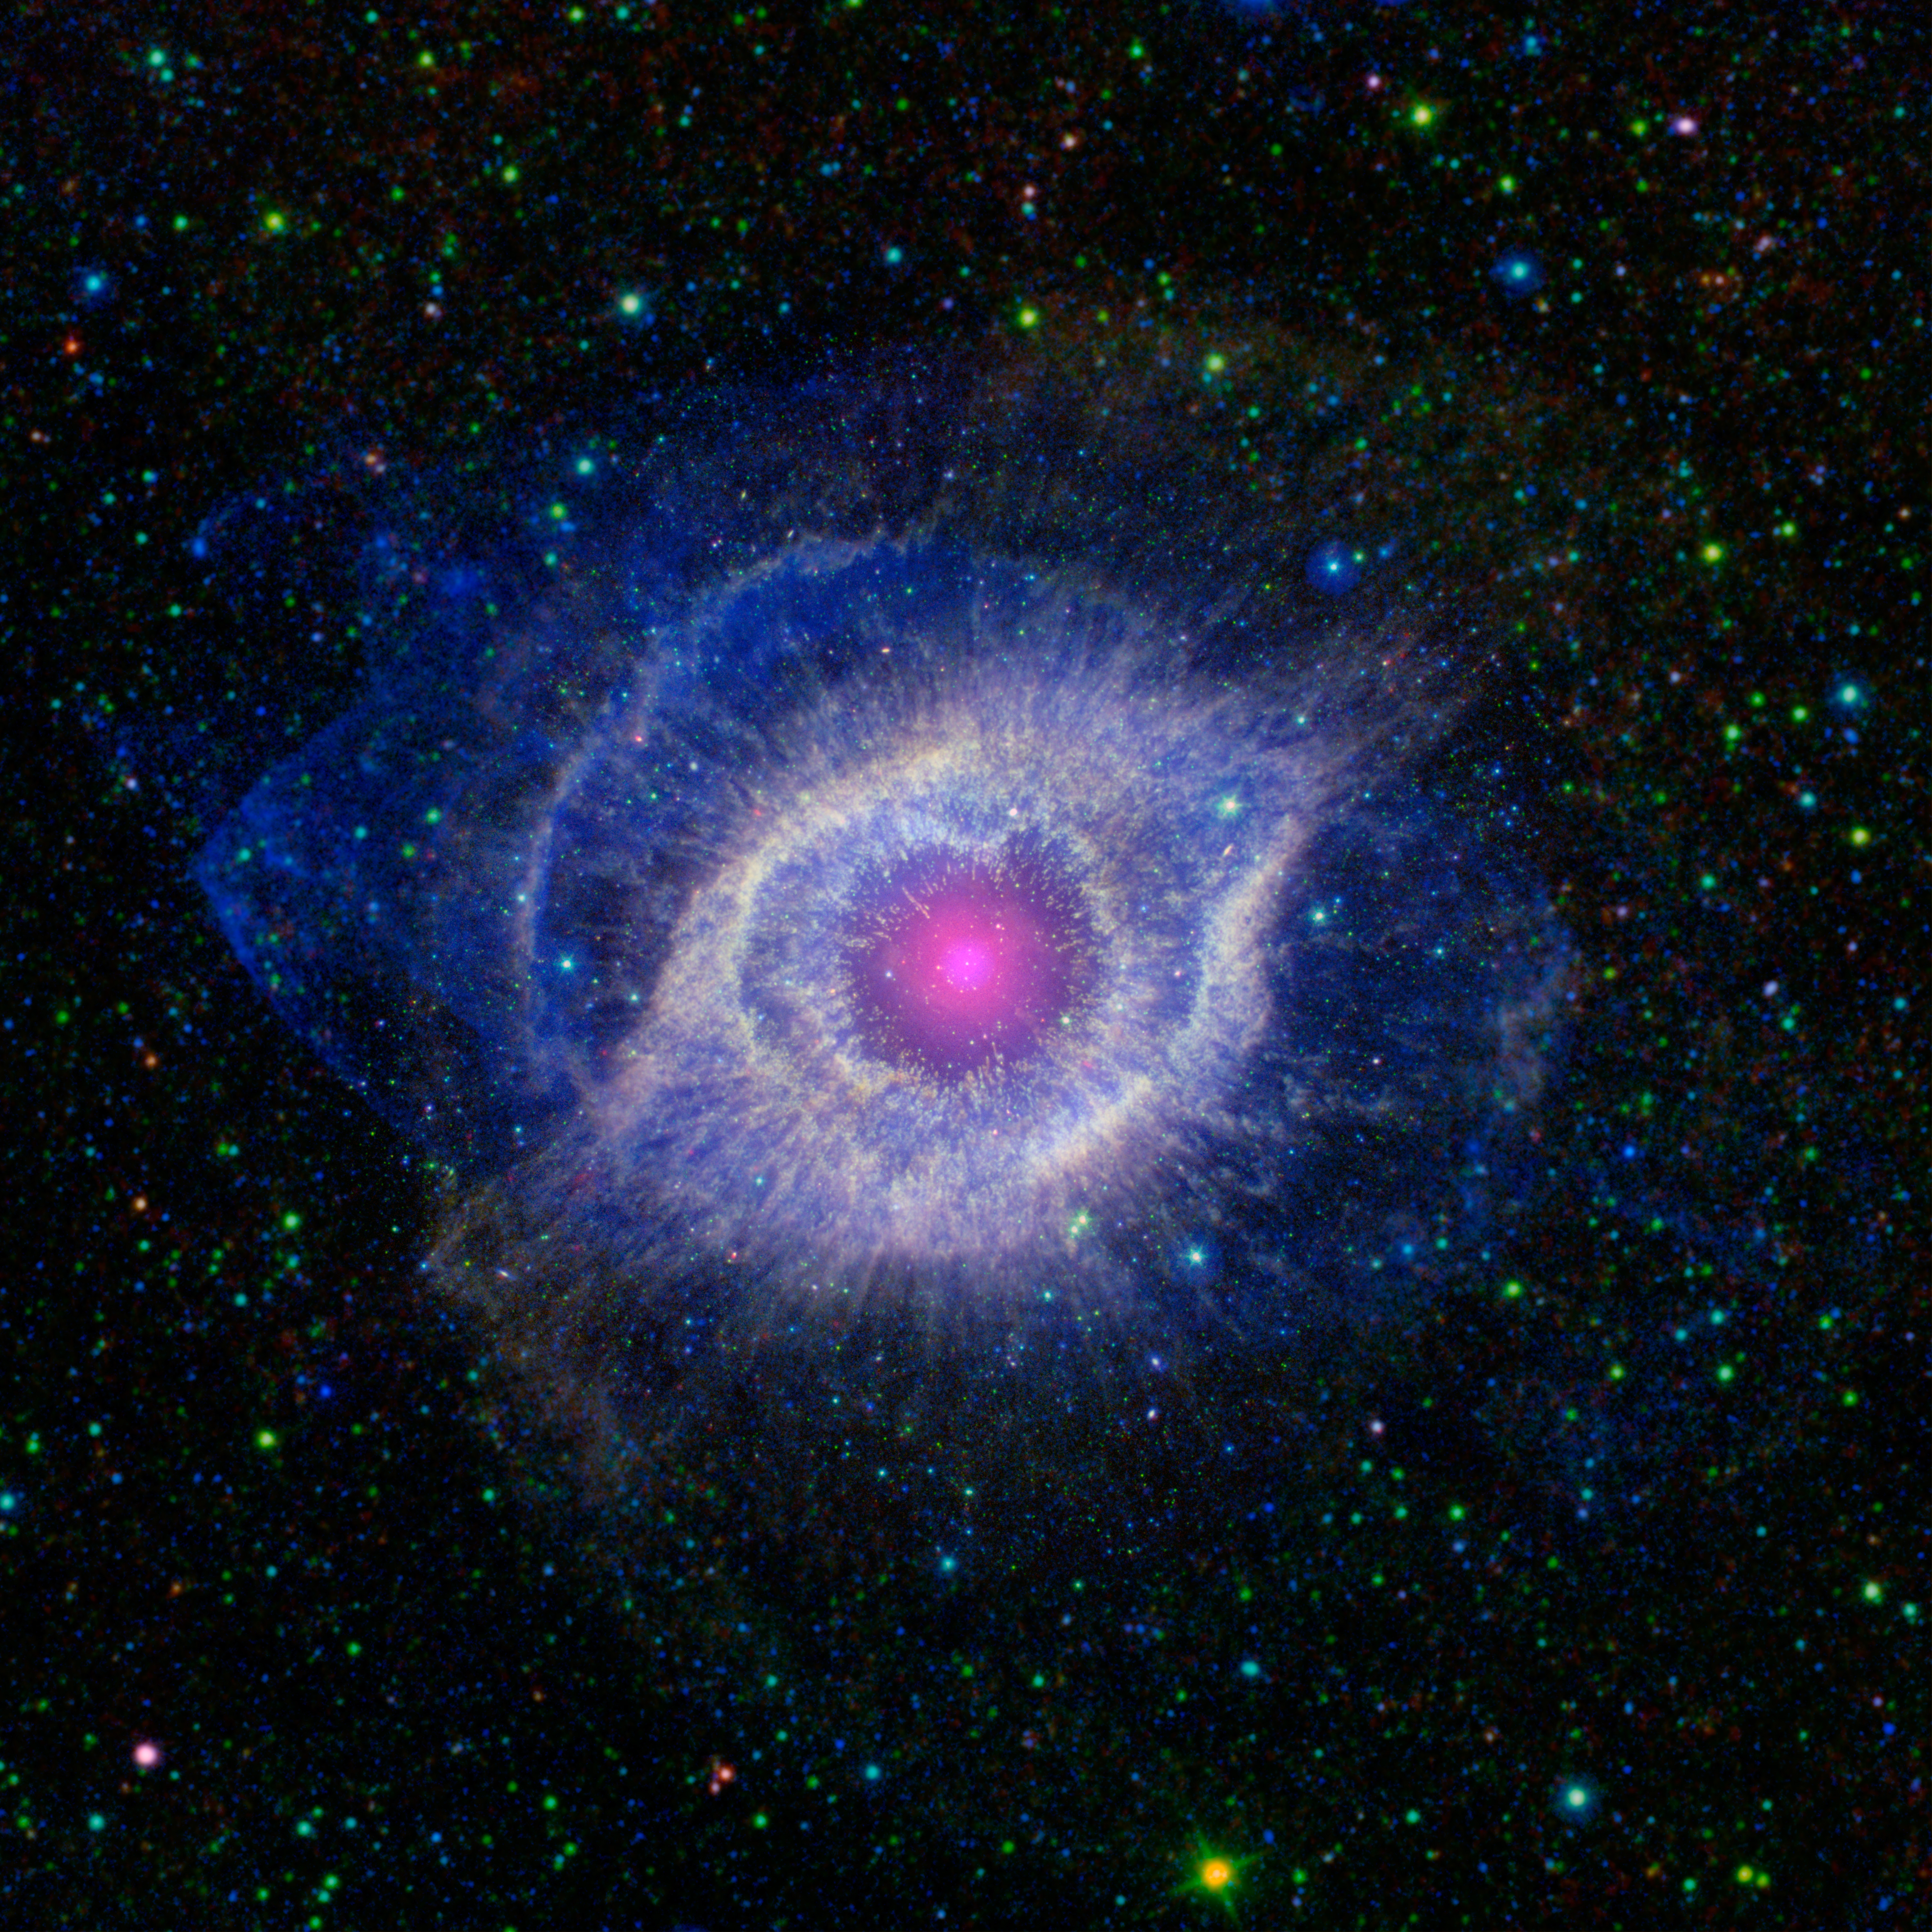 NASA - The Helix Nebula - Bigger in Death than Life